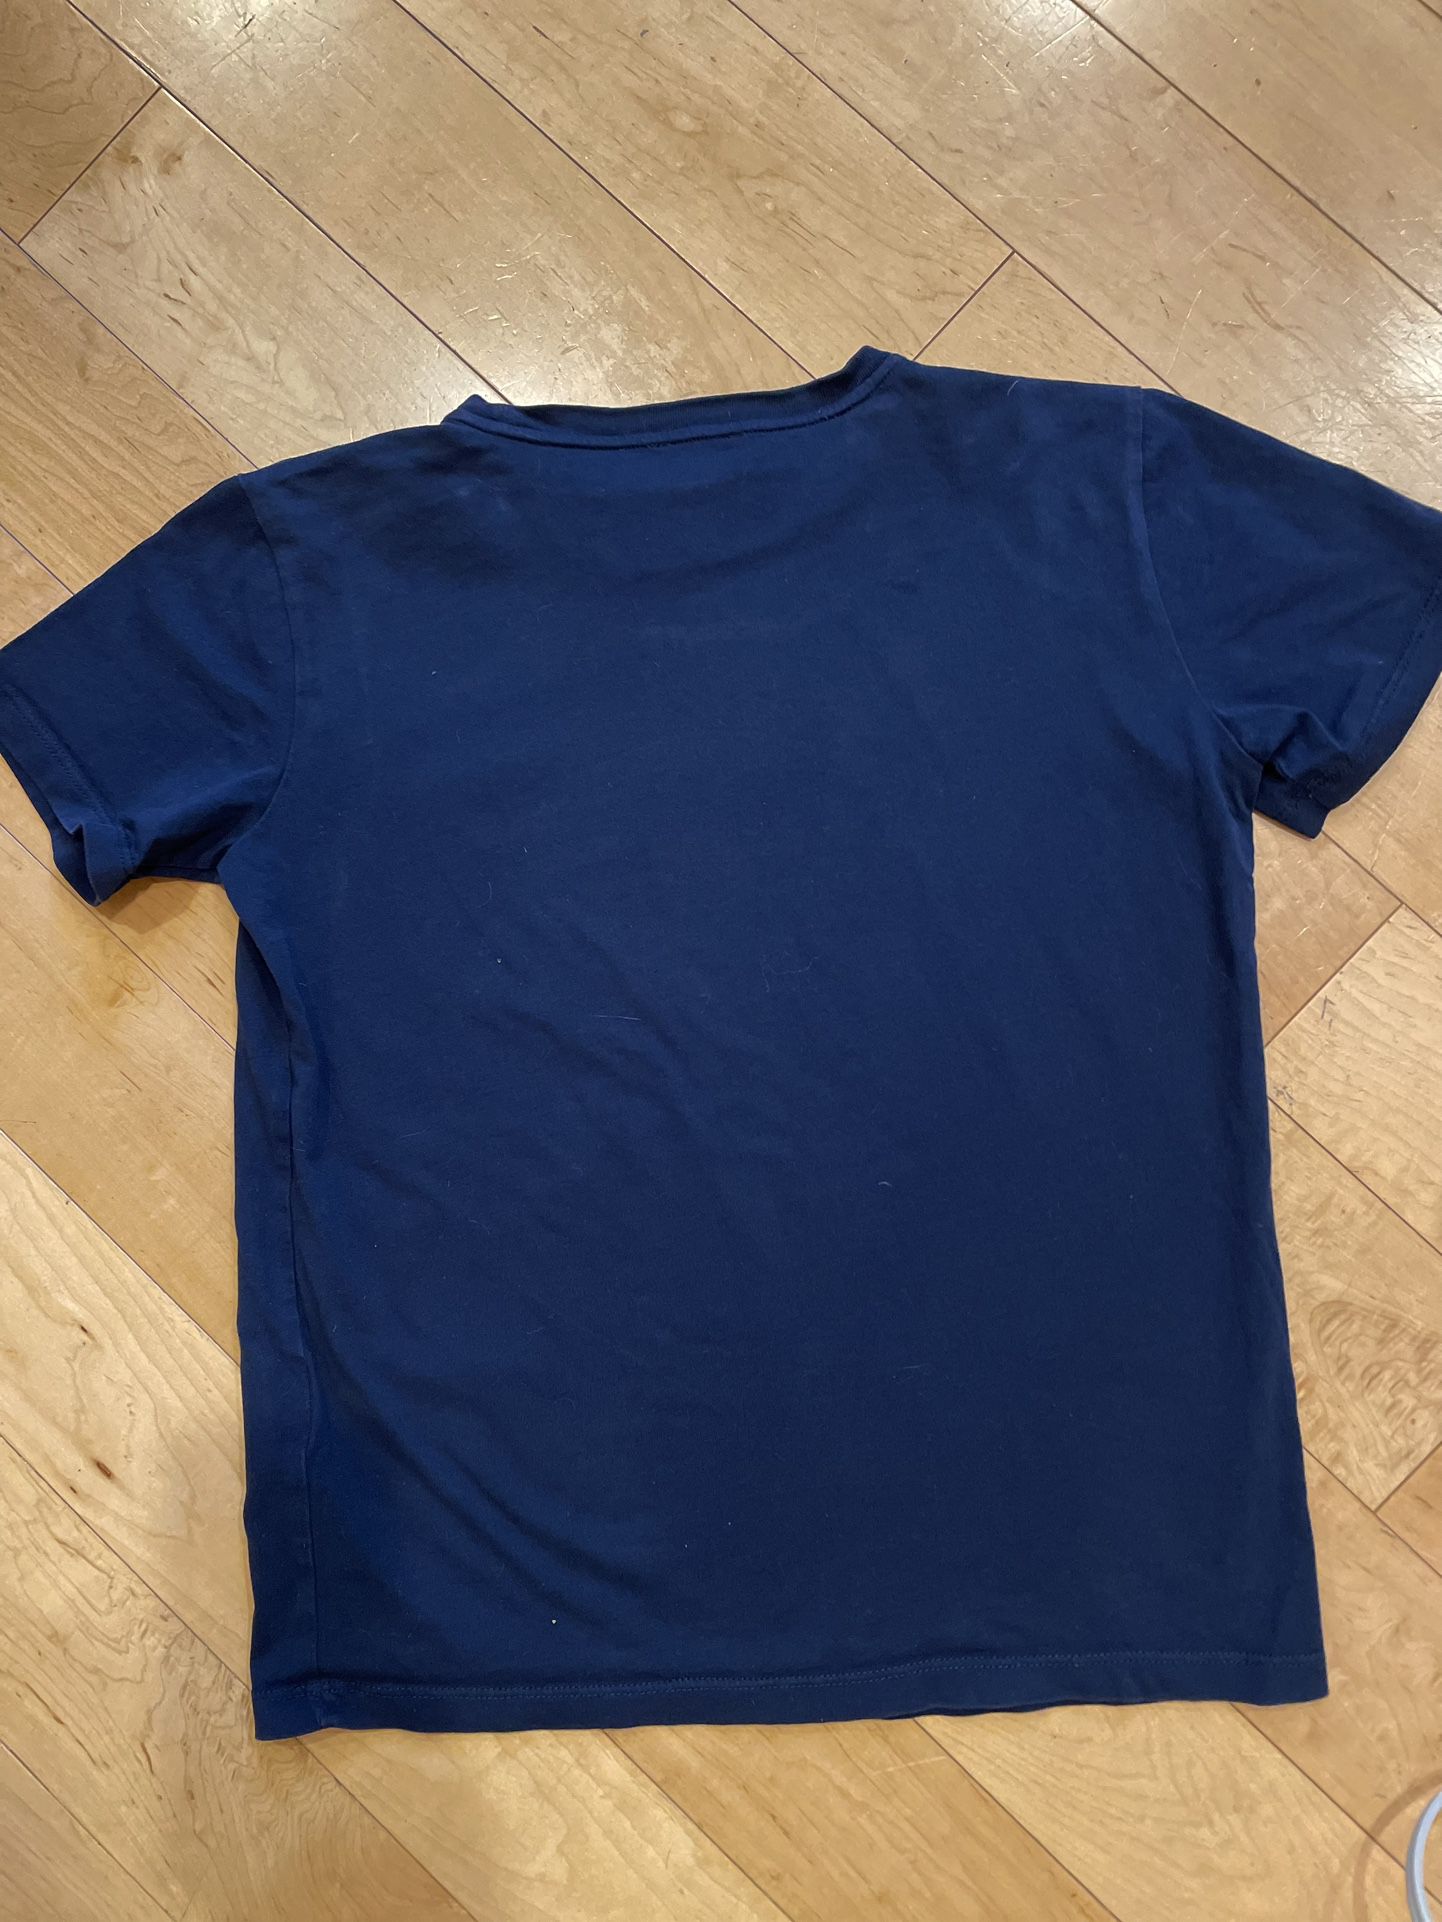 Armani EA7 T-shirt Navy Boys Size 12y Fit 10yo for Sale in Seattle, WA ...